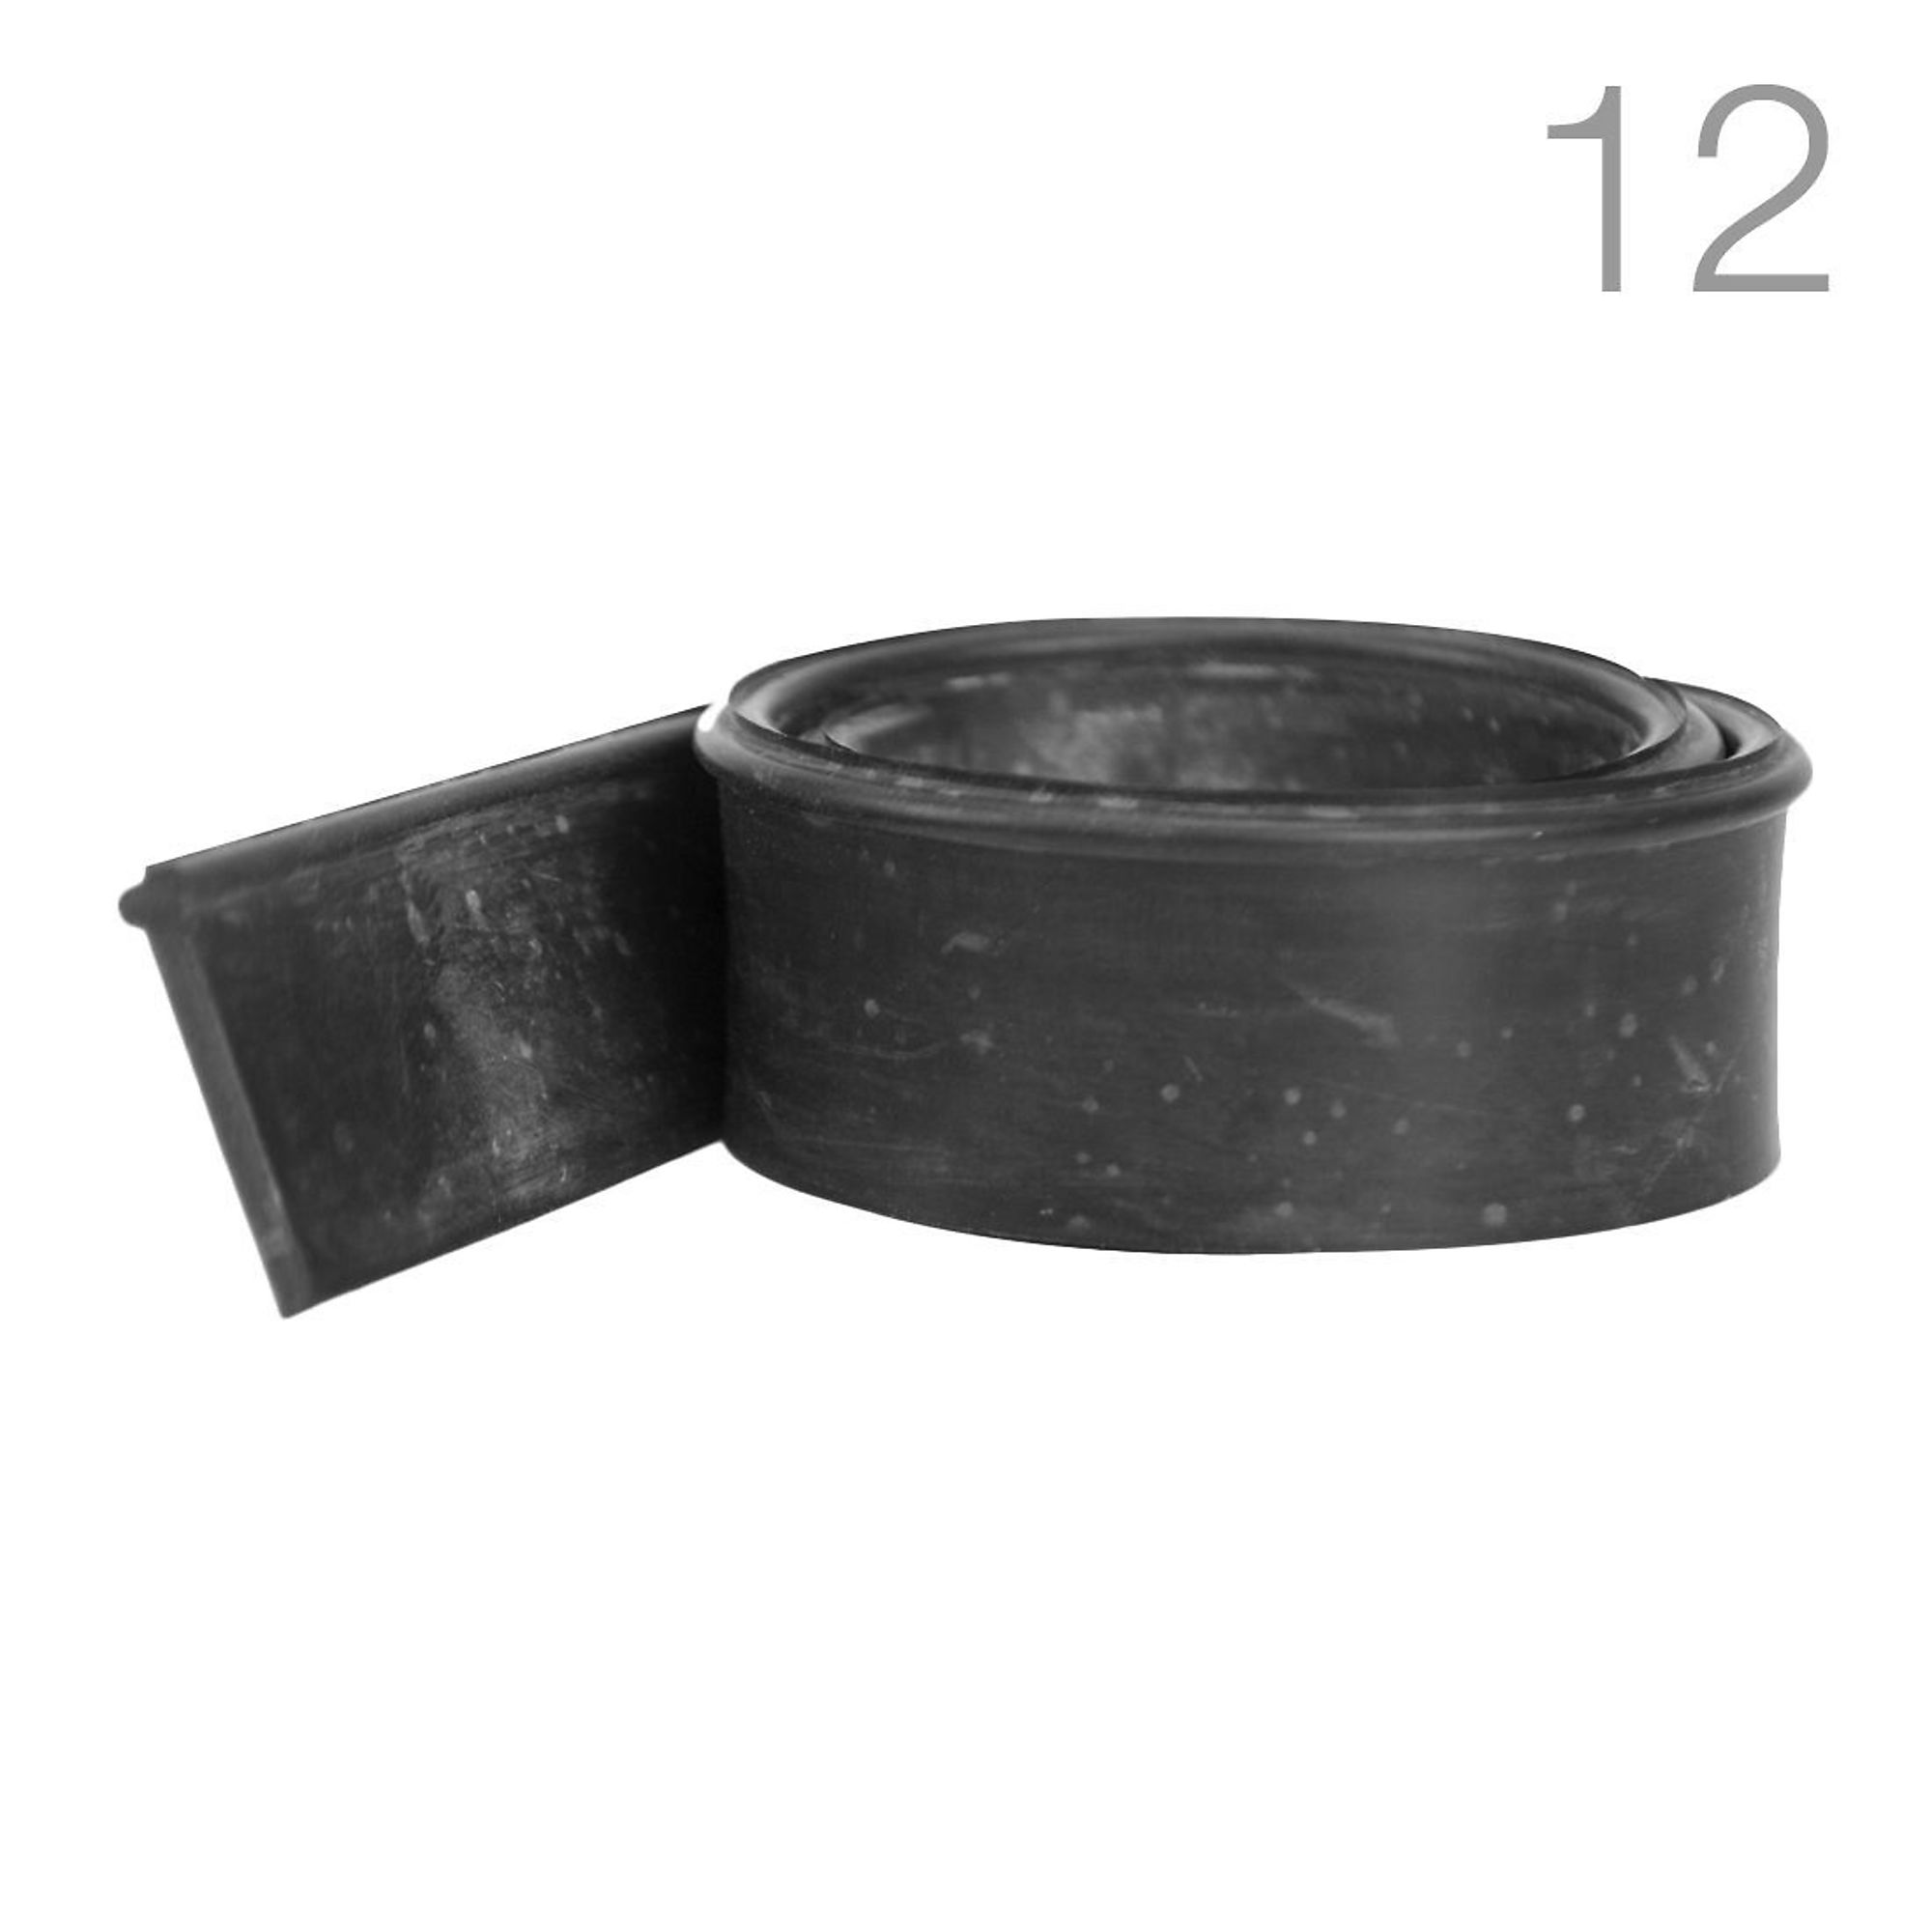 BlackDiamond, Flat Top Medium Squeegee Rubber 12 Pack - 20Inch, Model 012-05-50